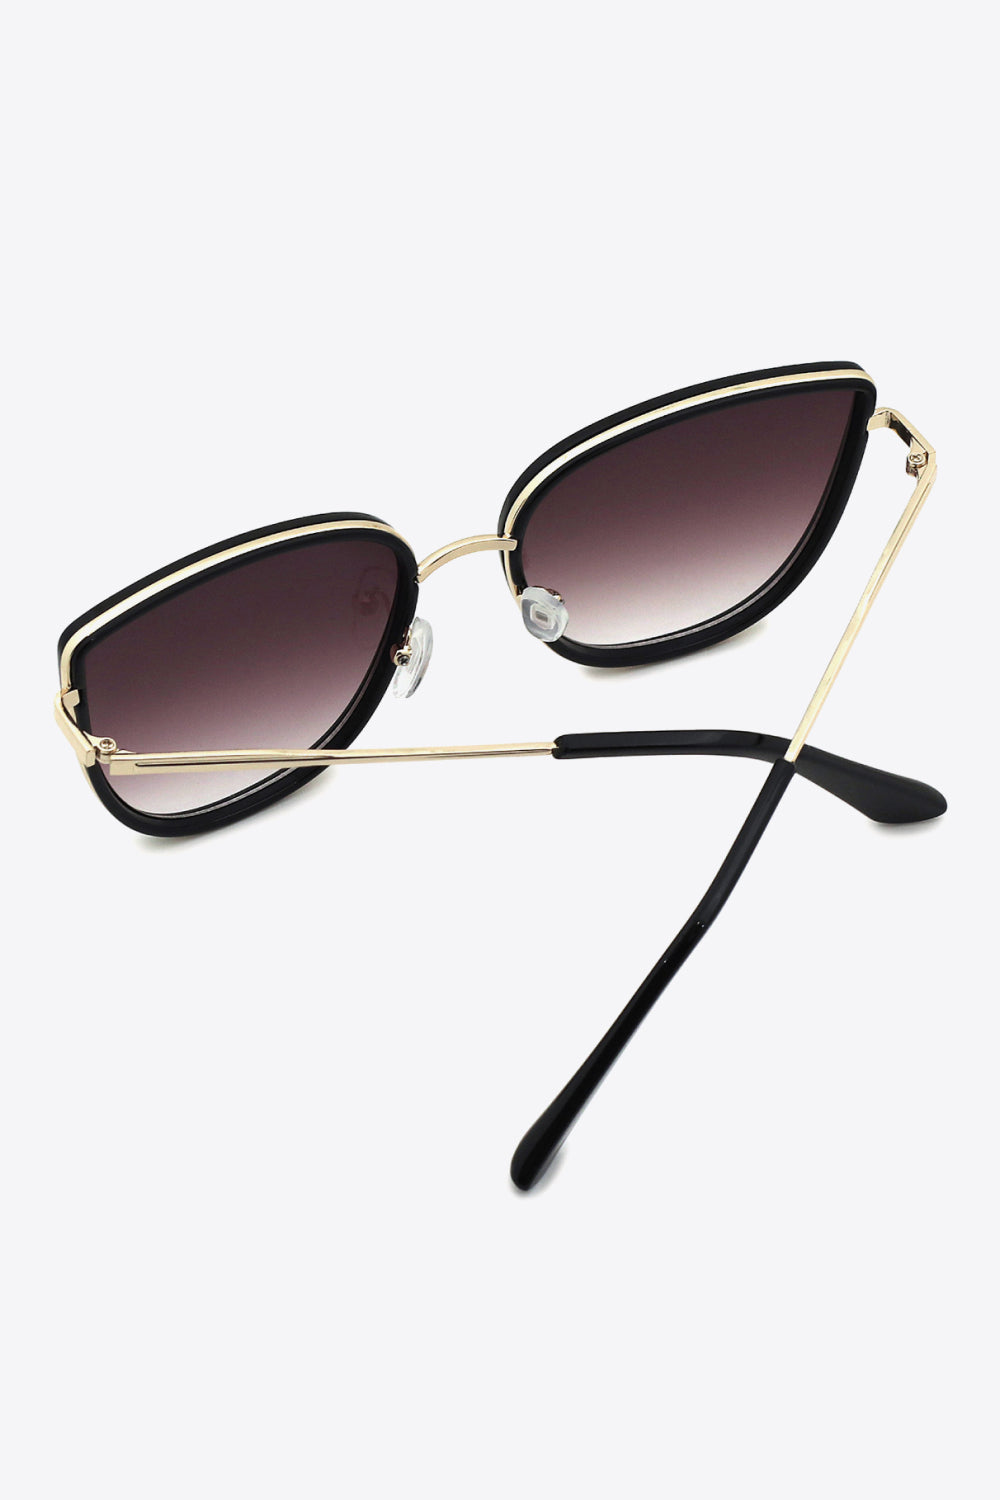 Full Rim Metal-Plastic Hybrid Frame Sunglasses - The Fashion Unicorn